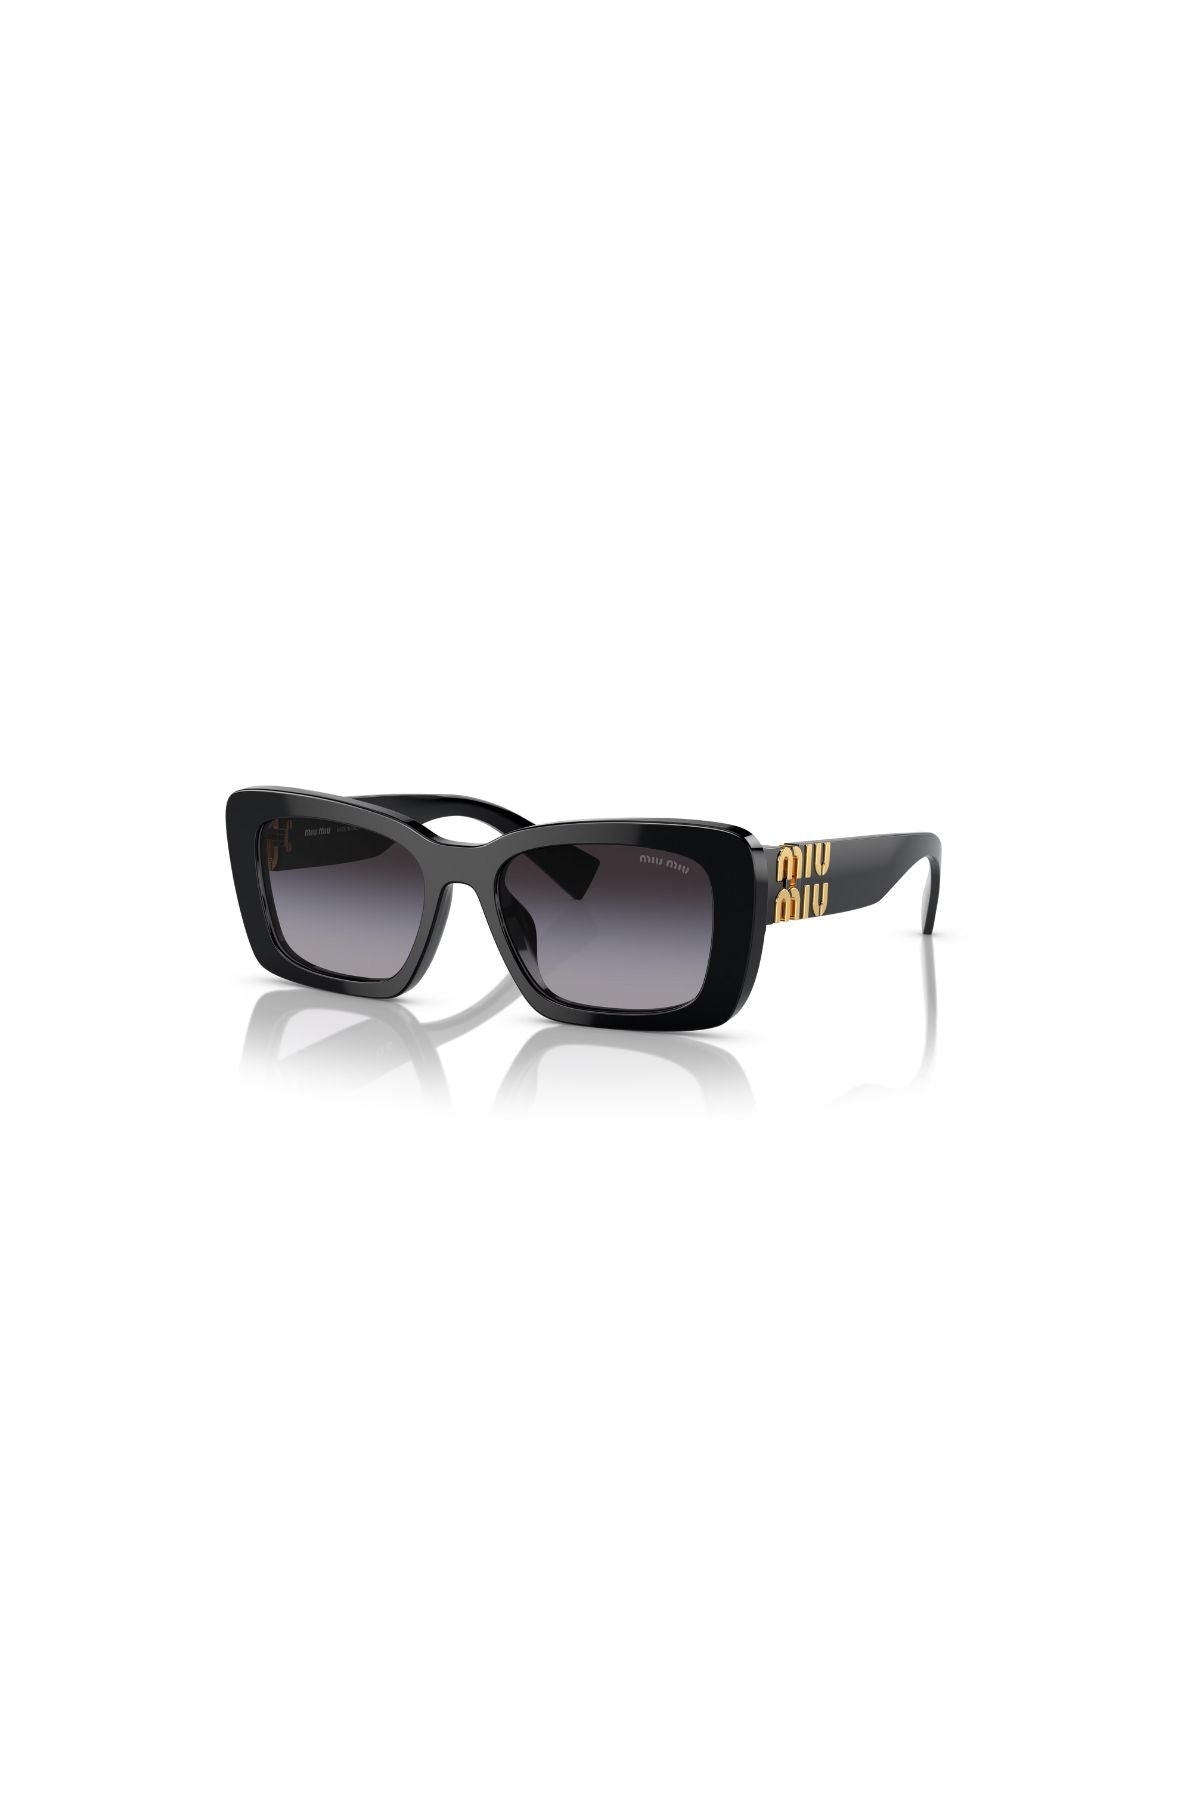 Miu Miu Rectangle Framed Sunglasses - Black/ Gradient Grey